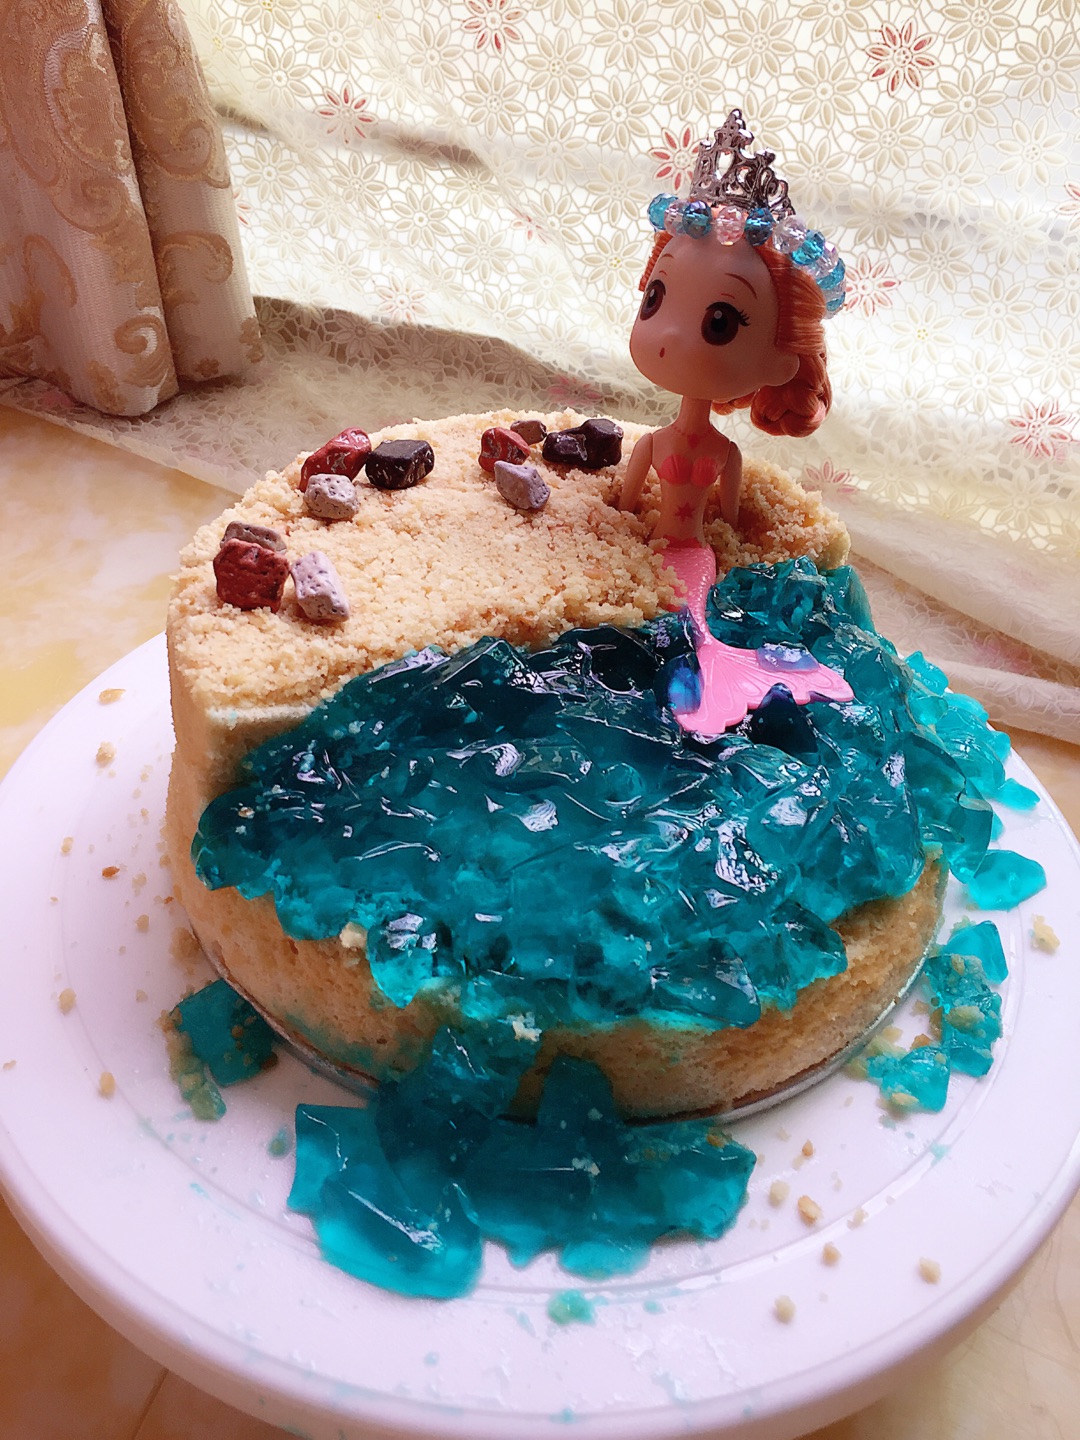 Hippomama's Kitchen 怡。然自得: 公主蛋糕 Princess Birthday Cake